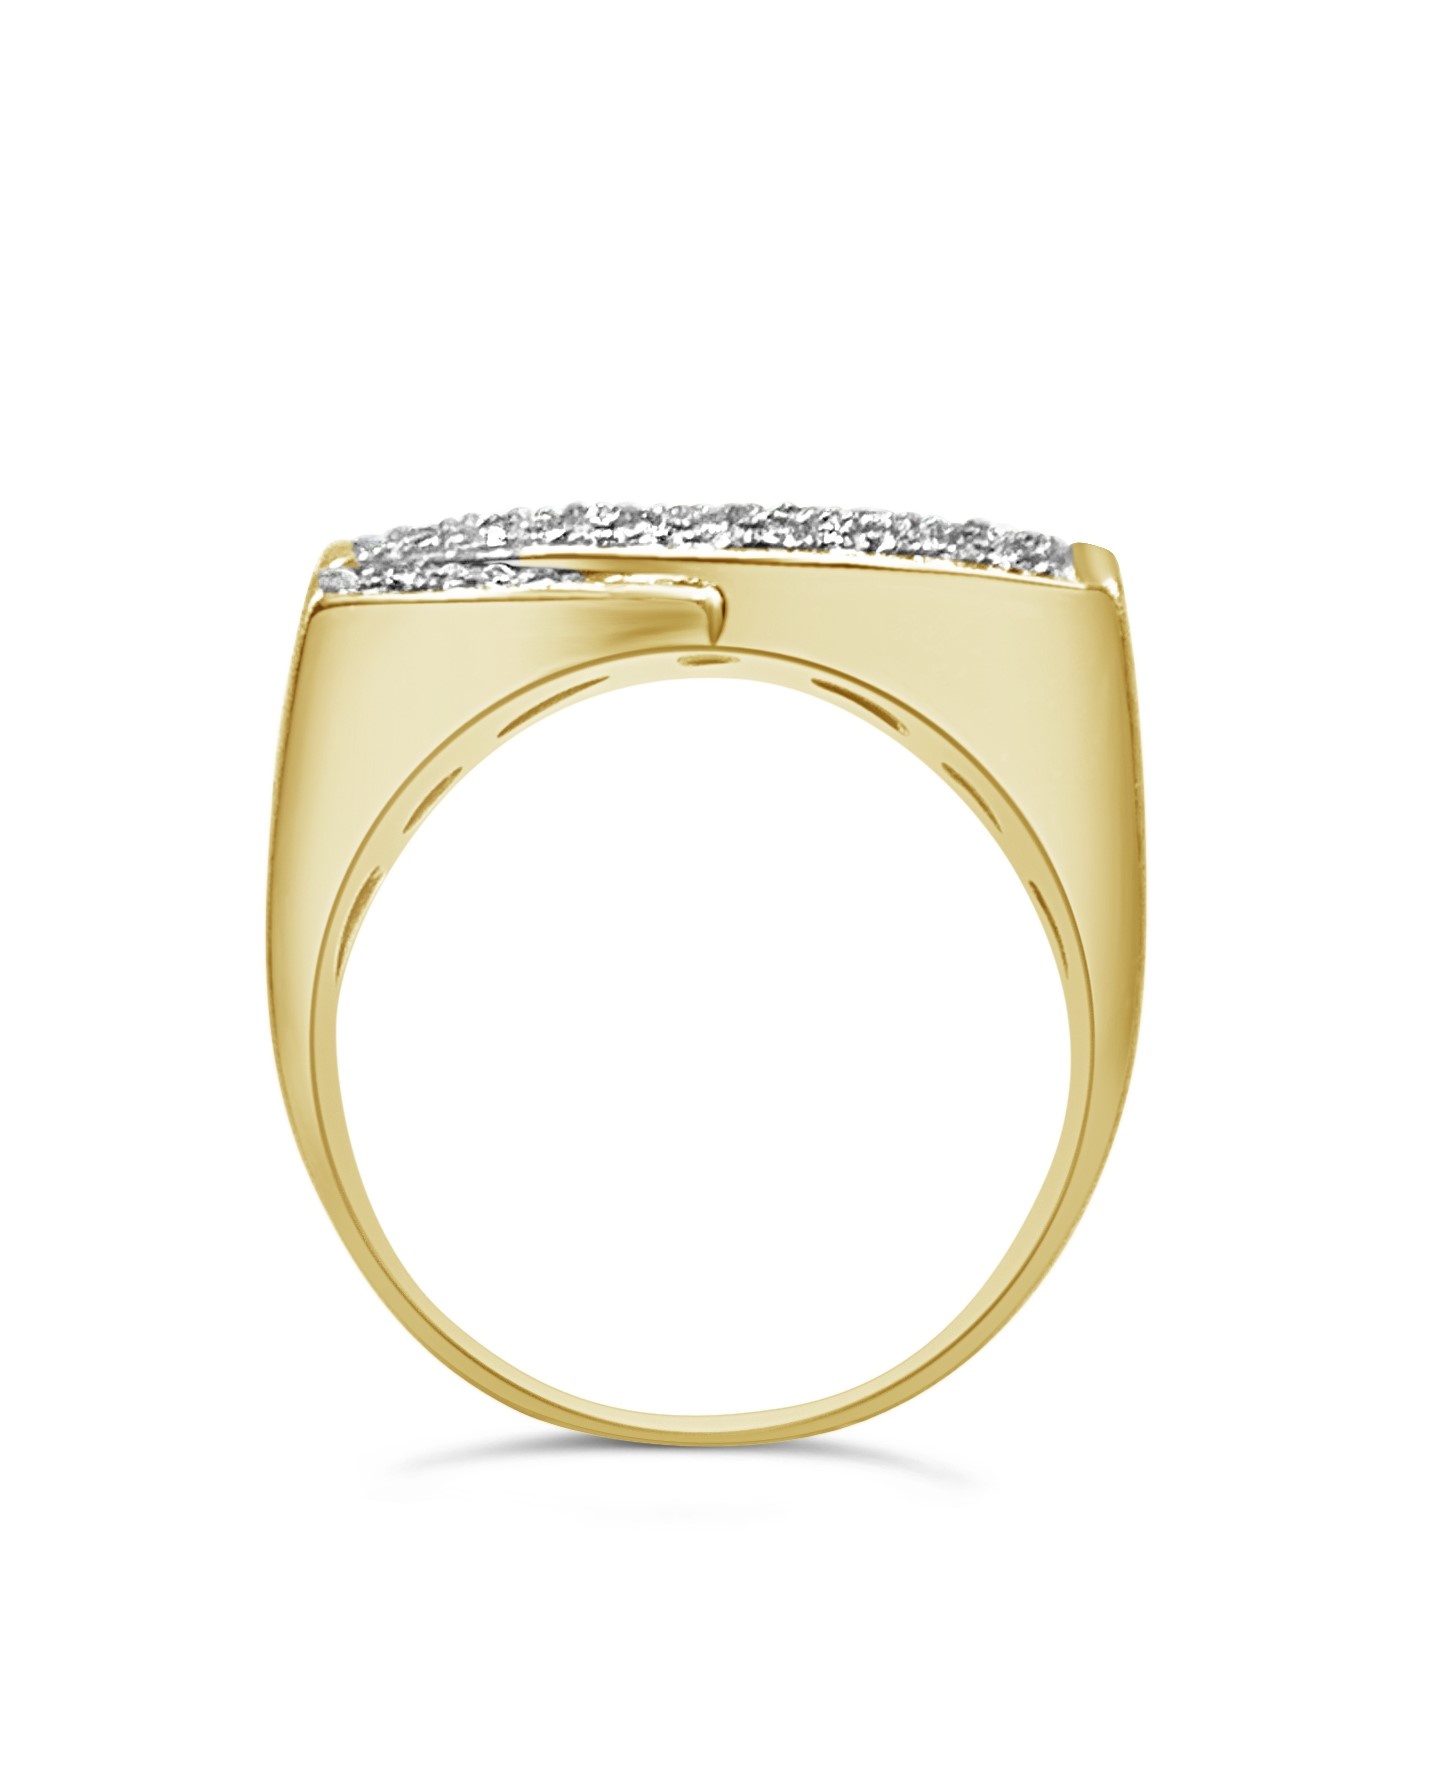 18k yellow & white  gold ring with 0,50ct diamonds